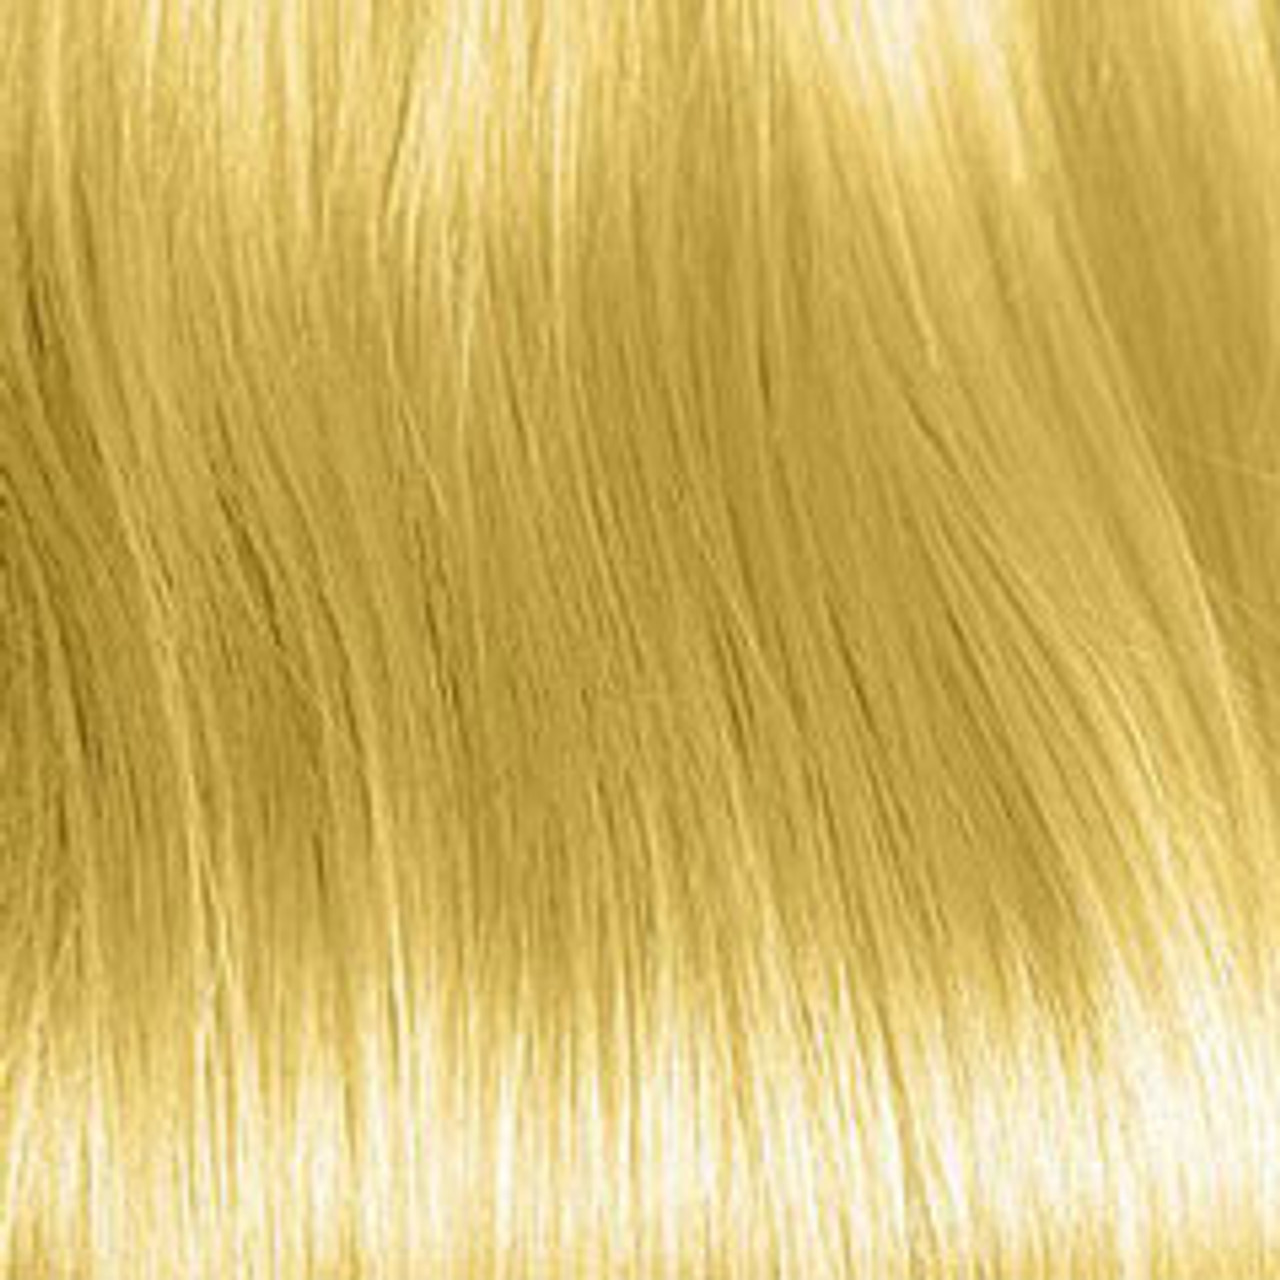 Punky Colour 3 in 1 Color - Blondetastic